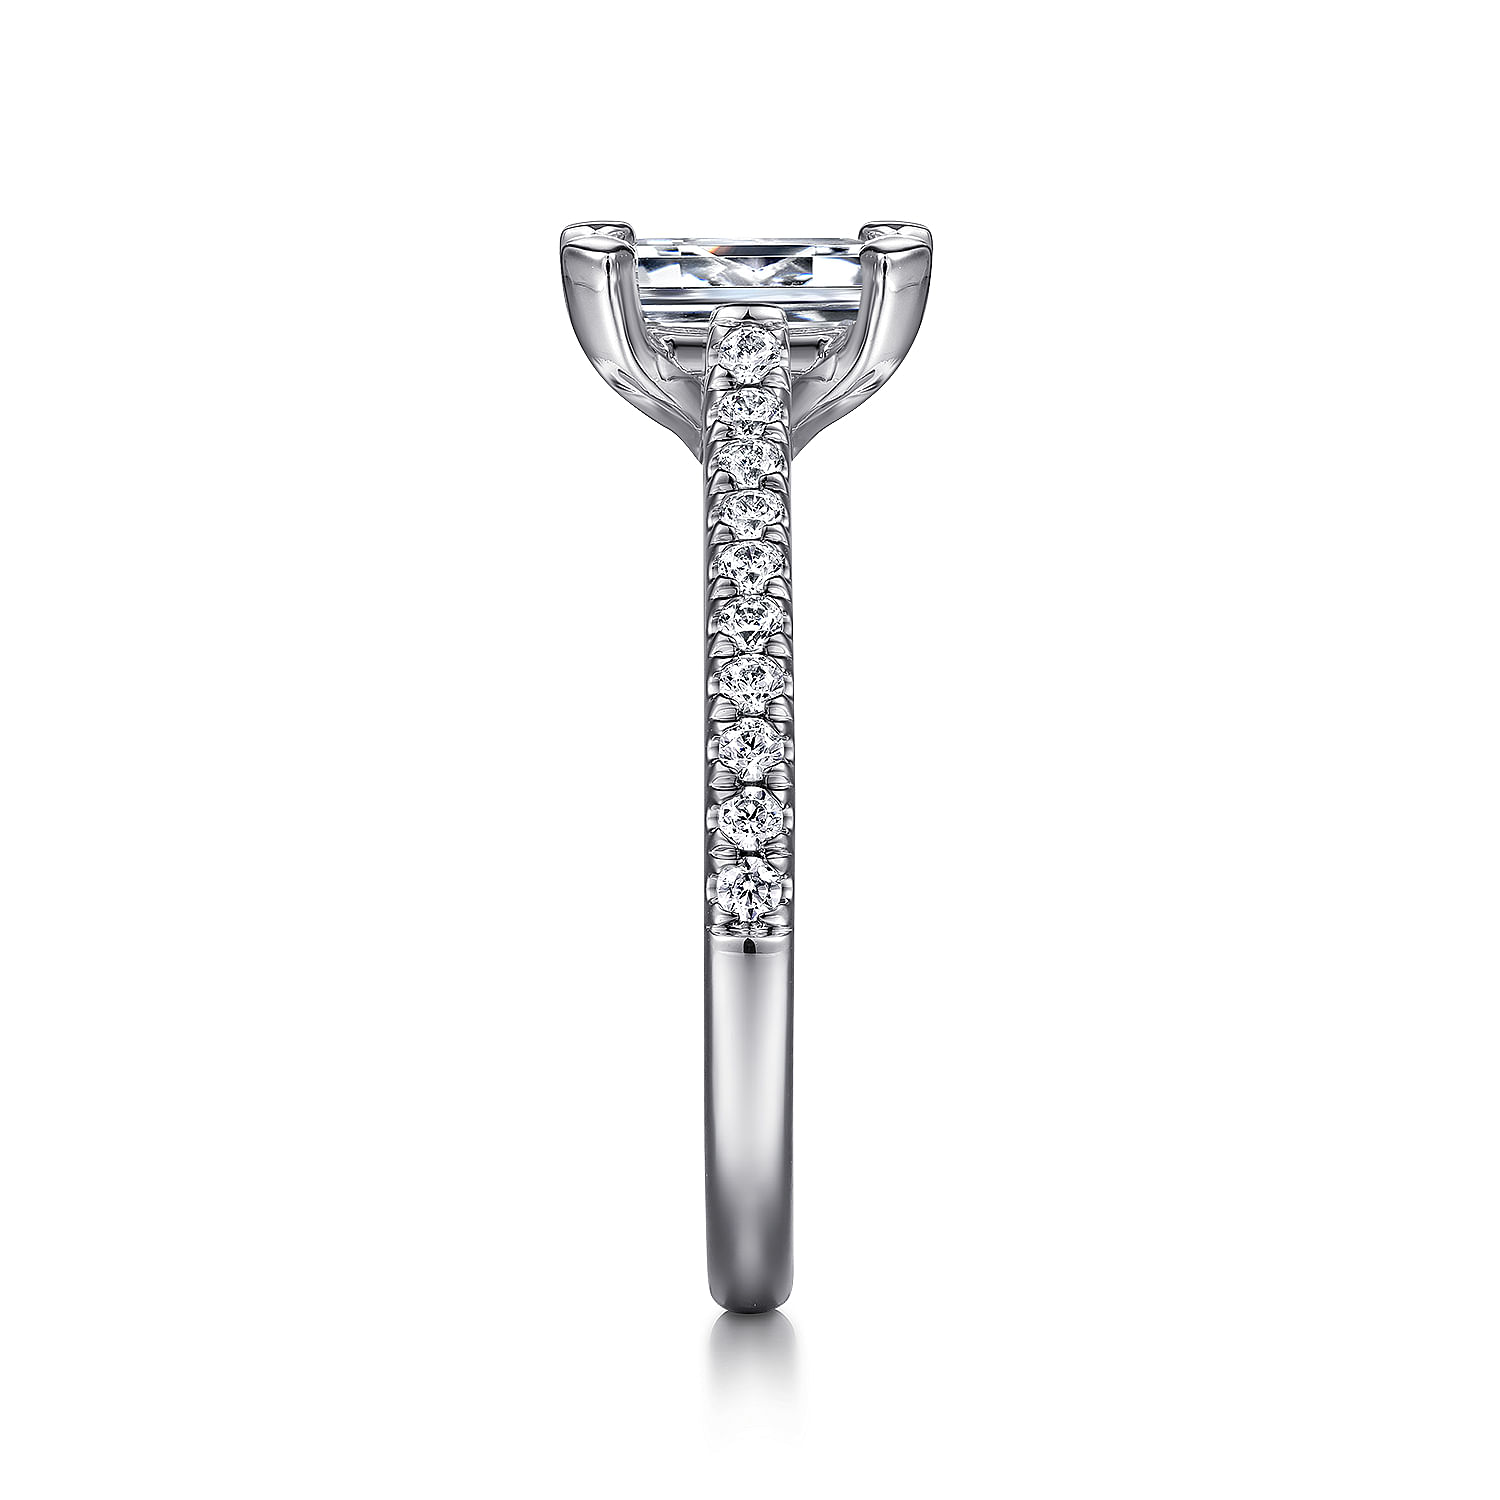 14K White Gold Emerald Cut Diamond Engagement Ring